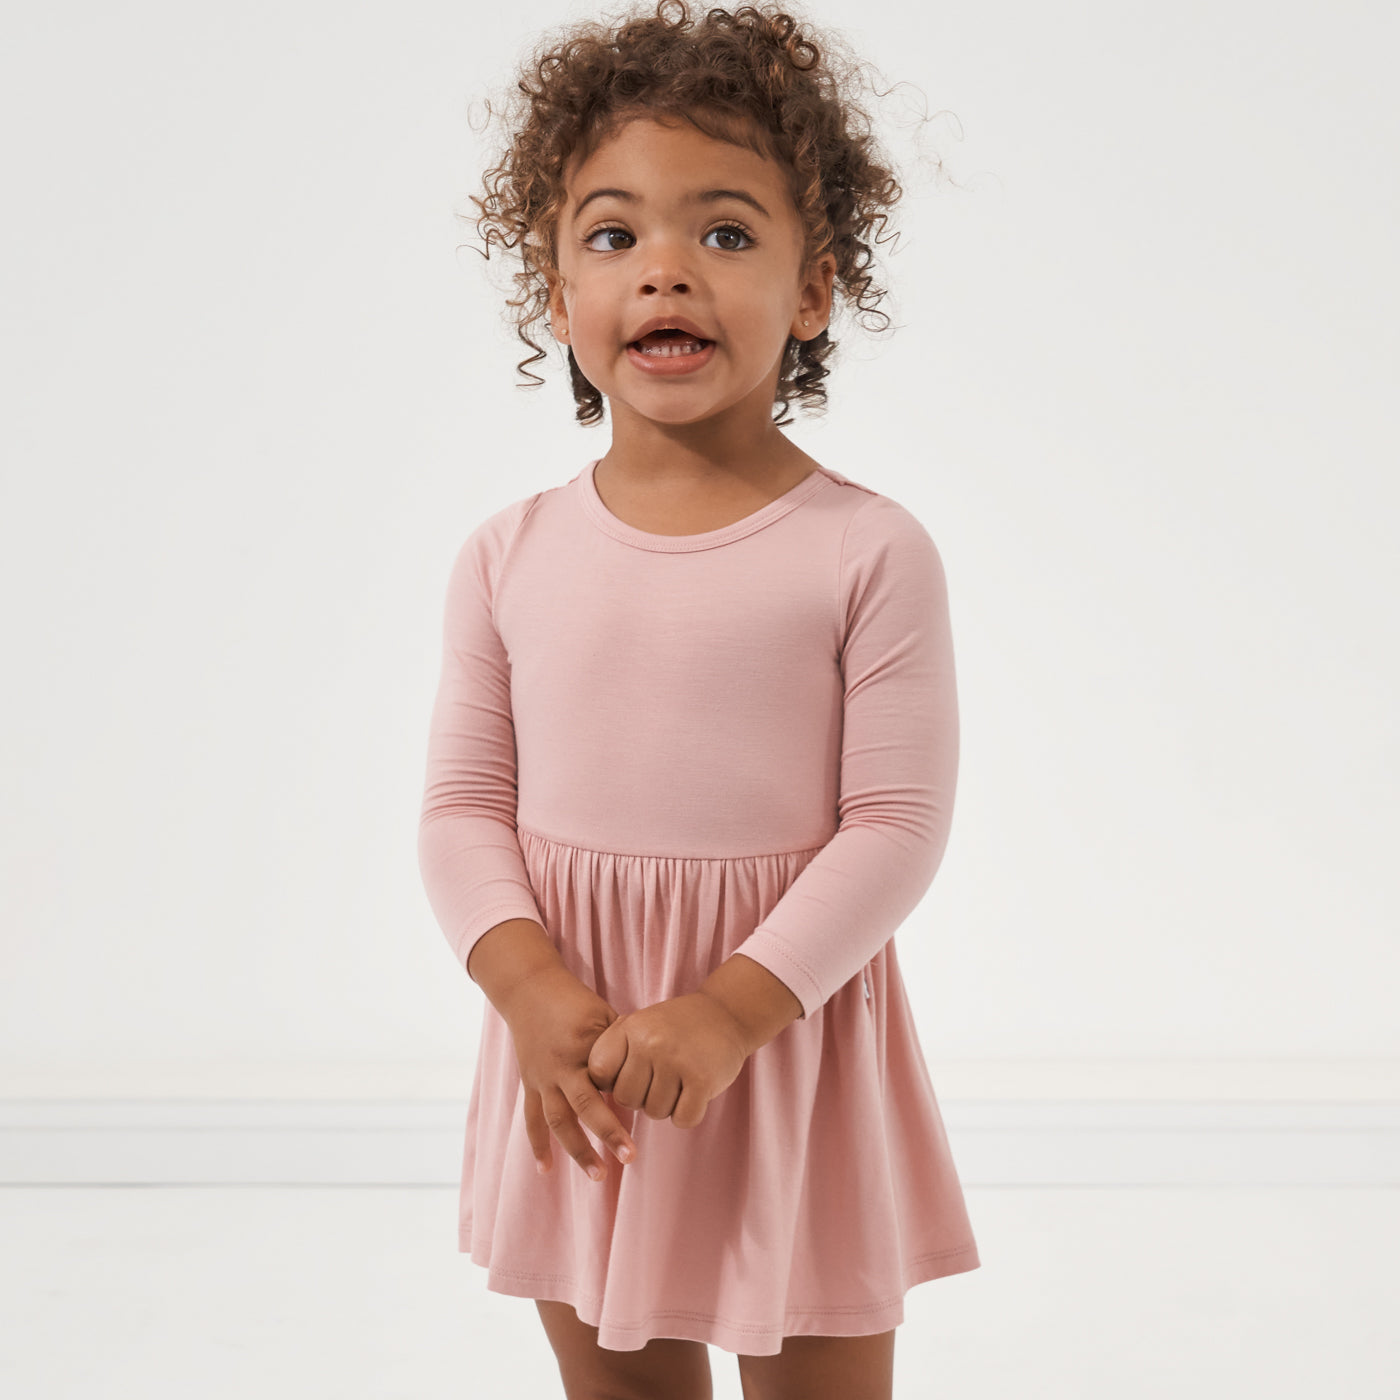 Child posing wearing a Mauve Blush twirl dress with bodysuit